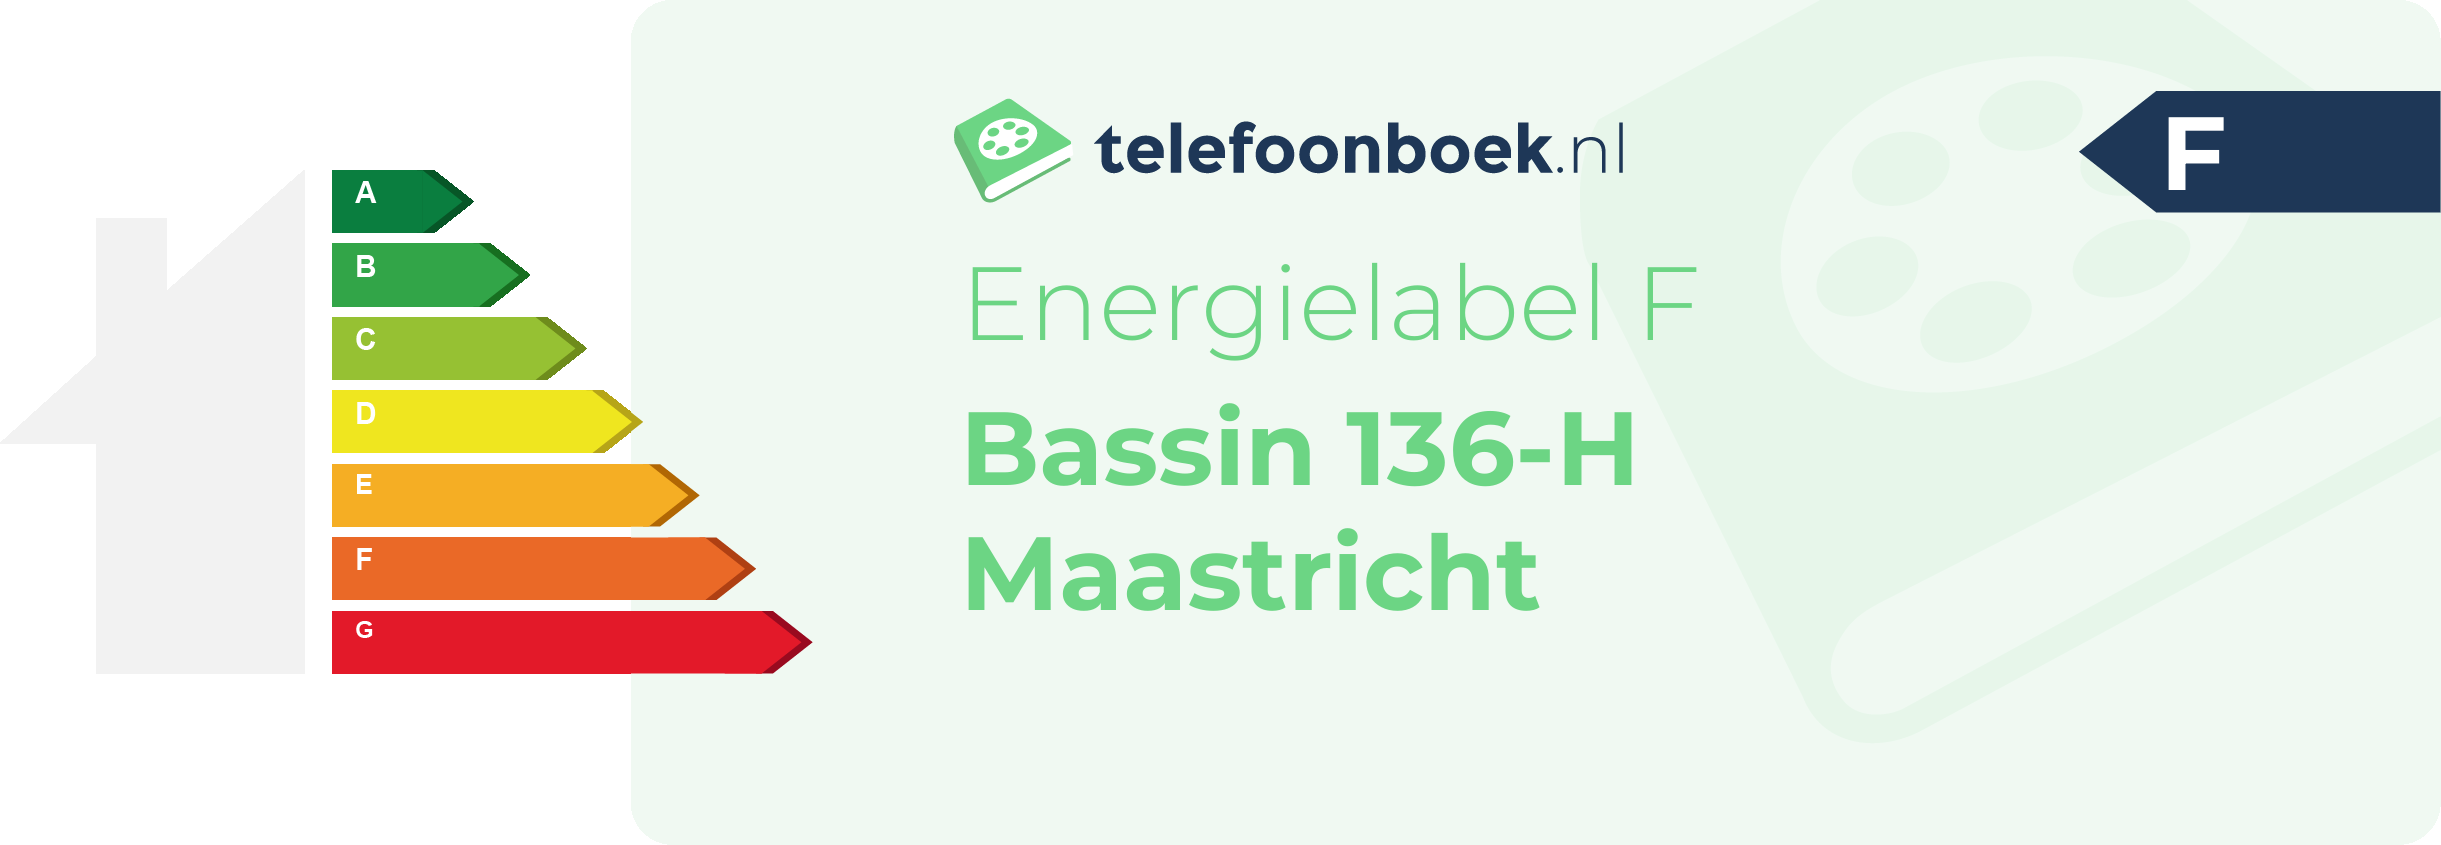 Energielabel Bassin 136-H Maastricht